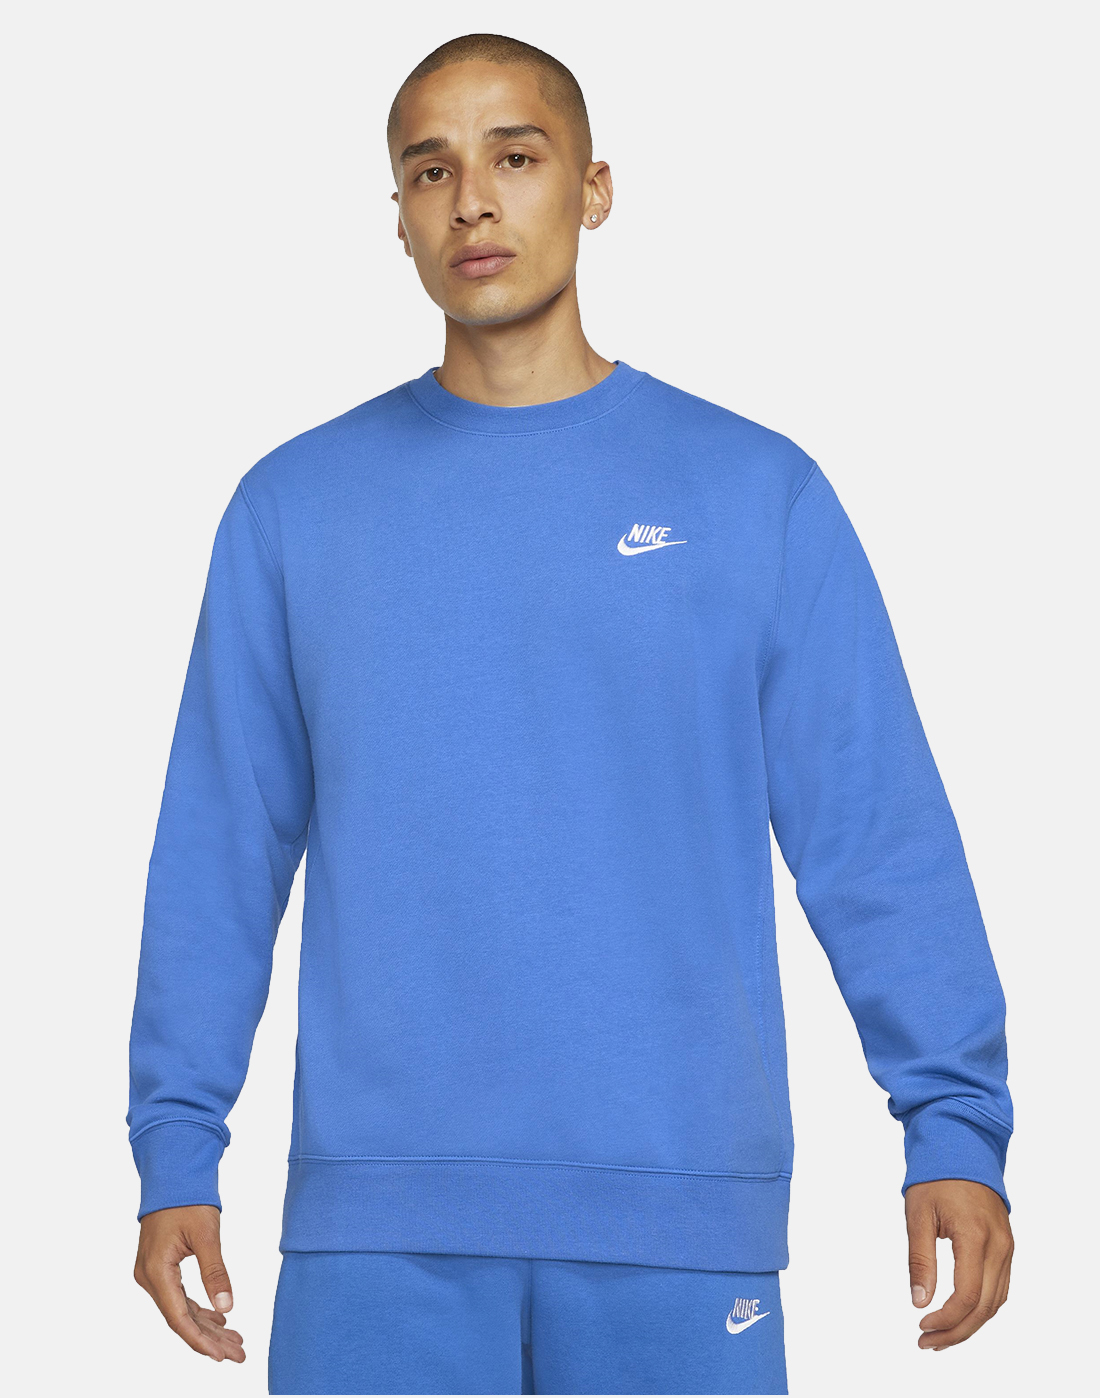 Nike Mens Club Fleece Crew Neck Sweatshirt - Blue | Life Style Sports UK